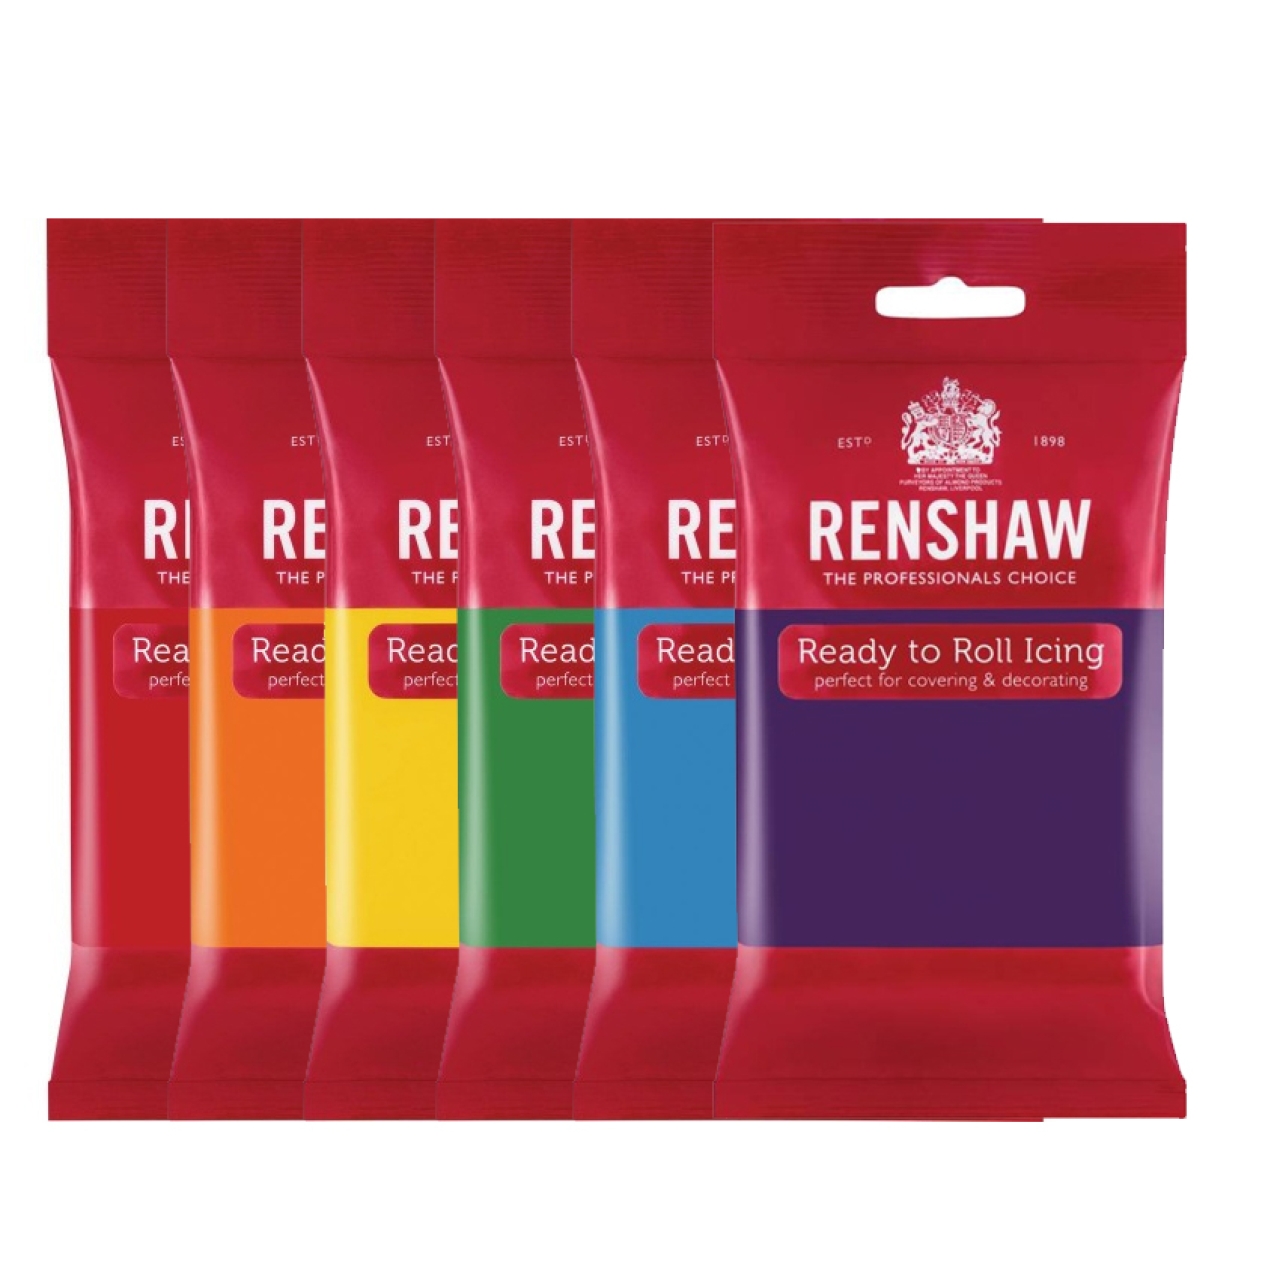 Renshaw Fondant Set 'Regenbogen' Türkis (Blau), Grün, Gelb, Rot, Orange, Purle (Lila)